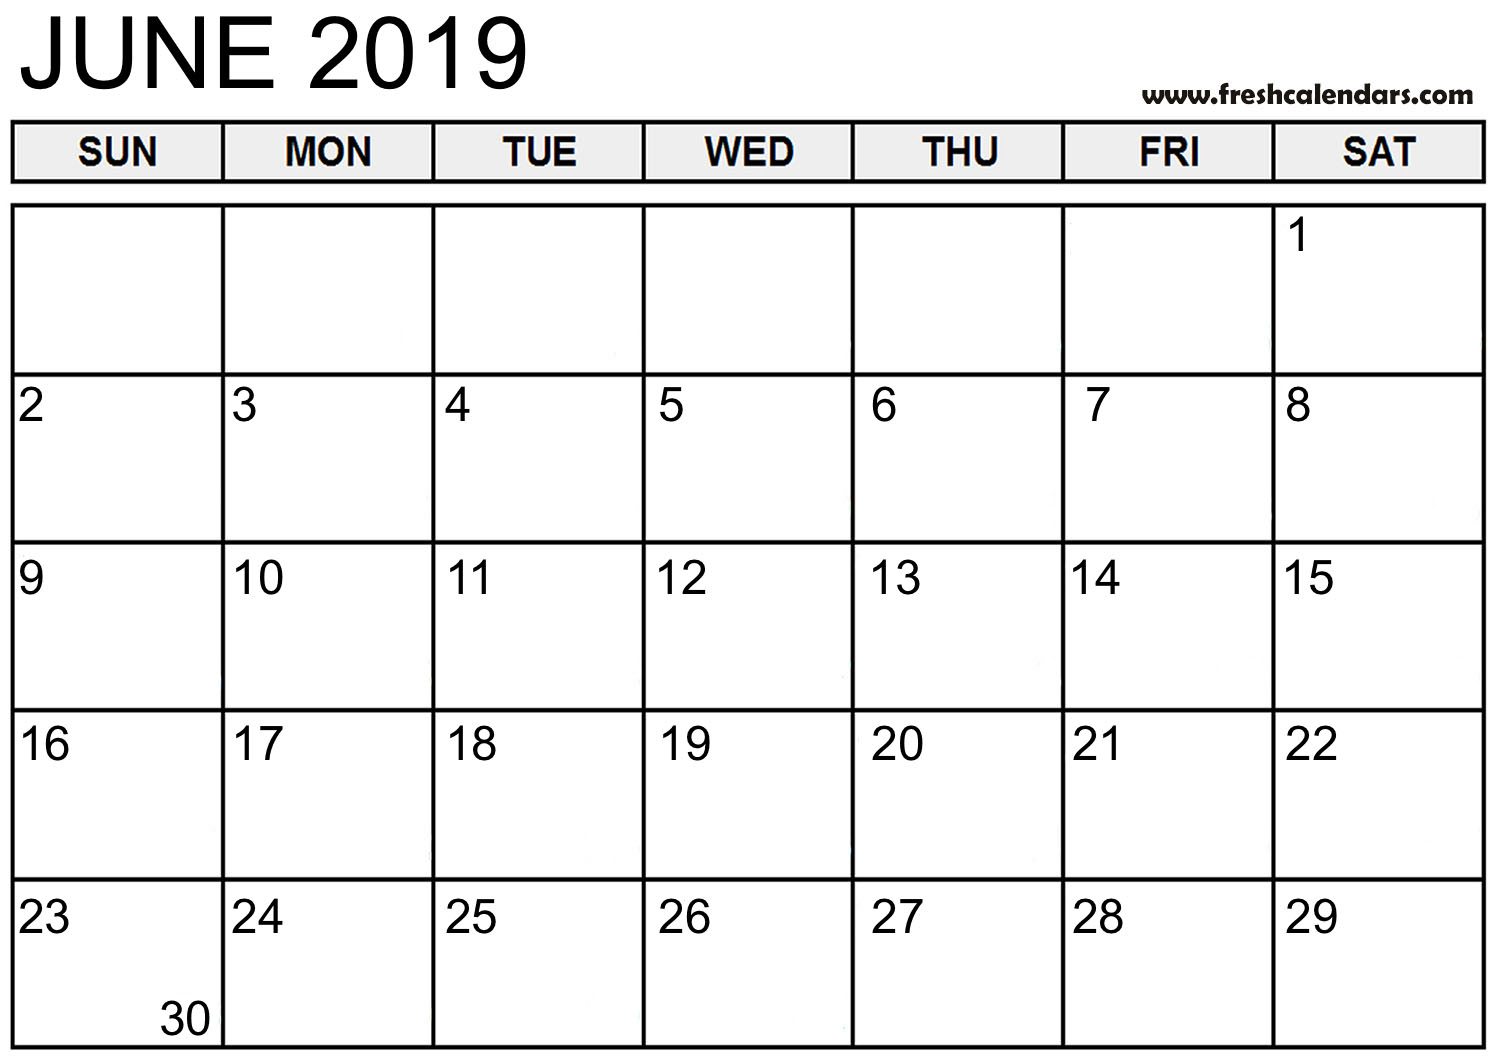 june-2019-calendar-printable-with-holidays-whatisthedatetoday-com